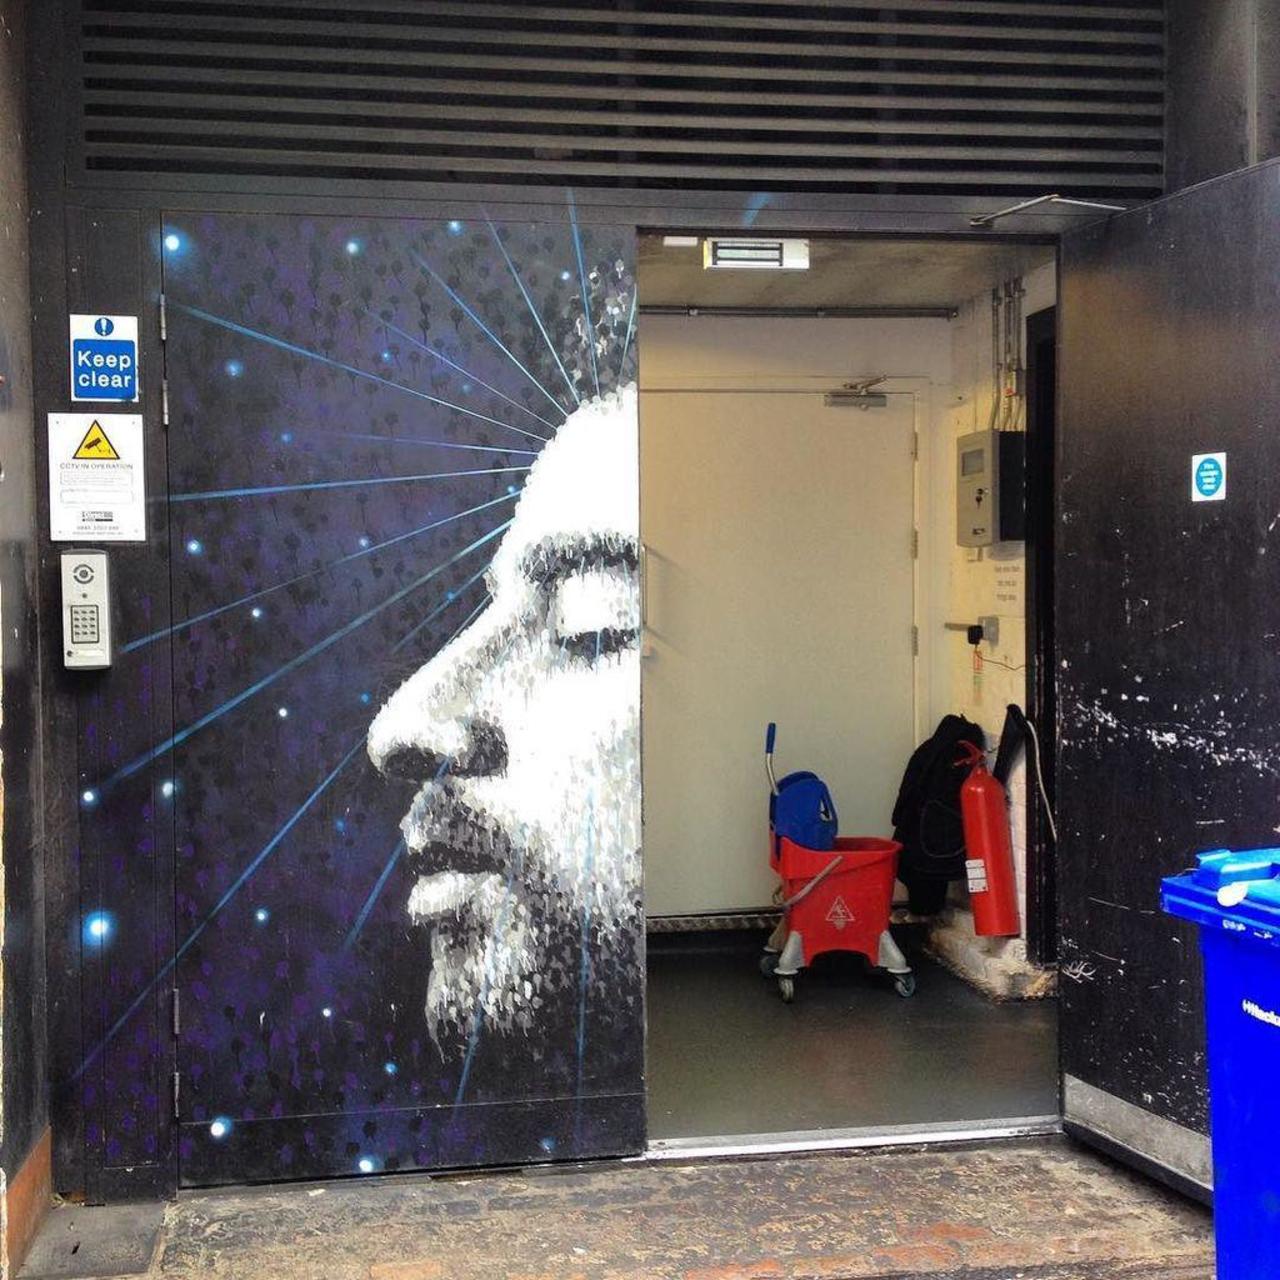 Open your head. #streetart #streetartlondon #graffiti #london #thisislondon by isadarko http://t.co/tJD2r8CLMN